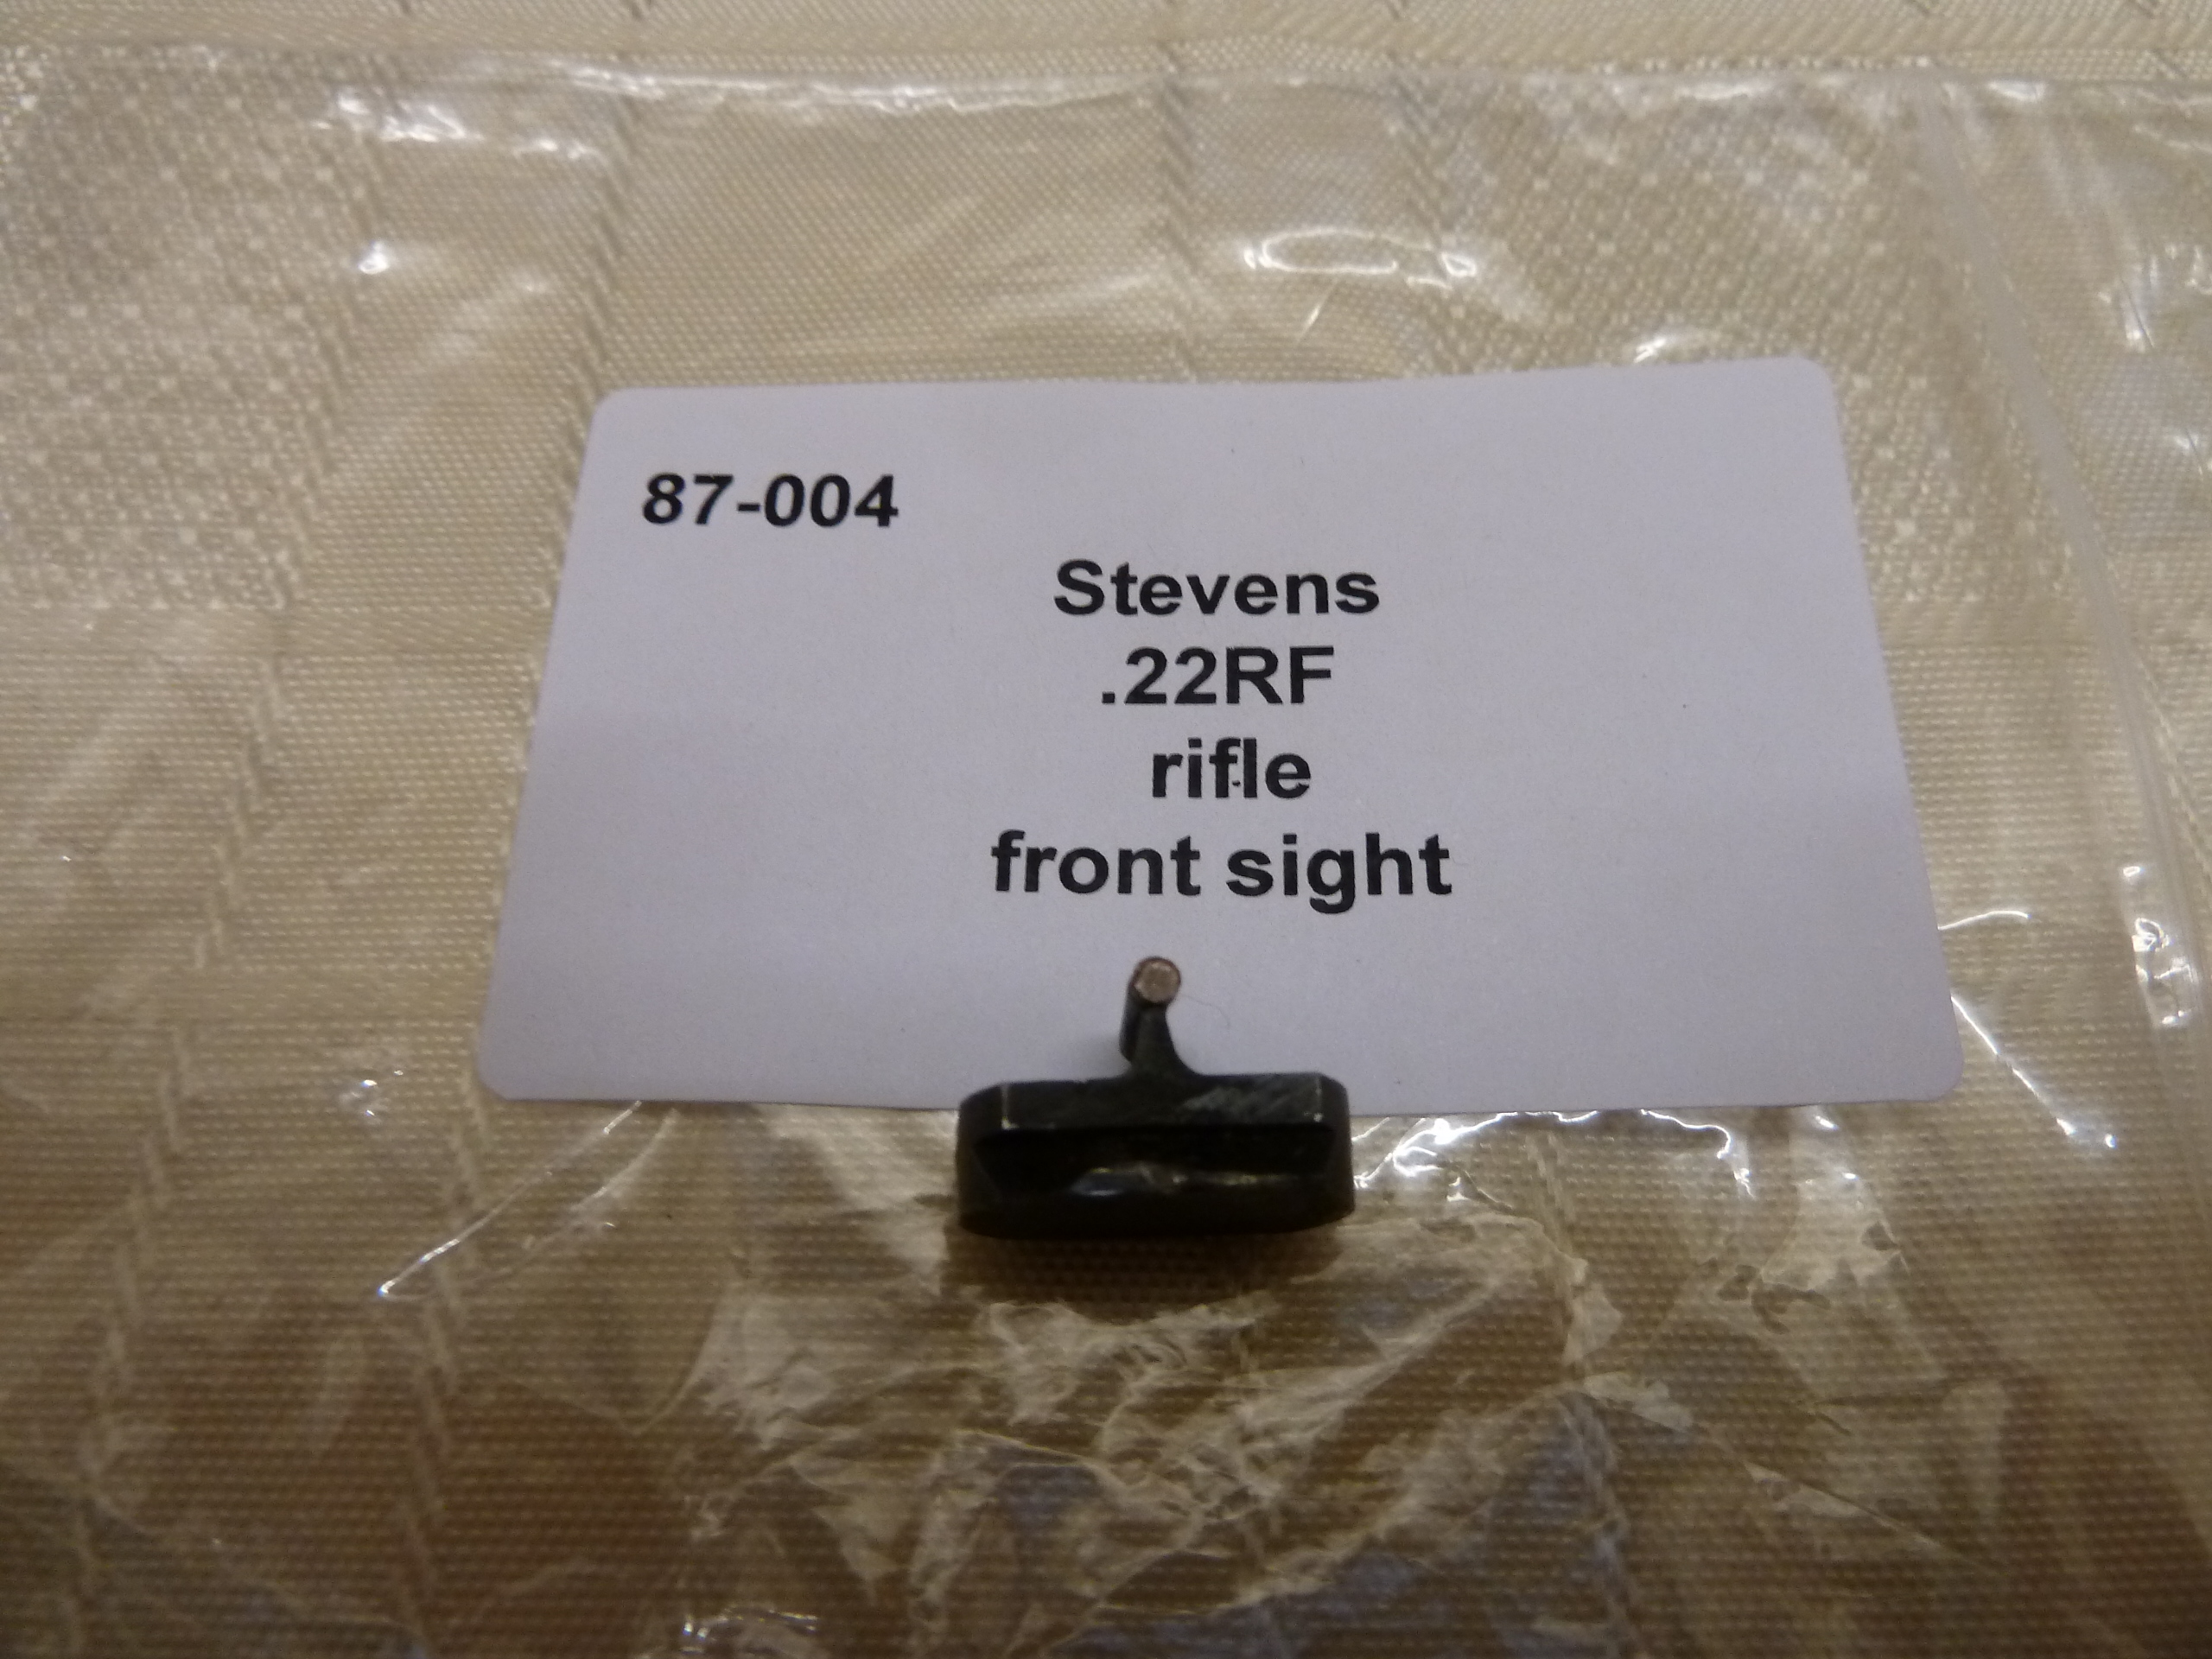 87-004 Sevens .22rf rifle rear sight (3)